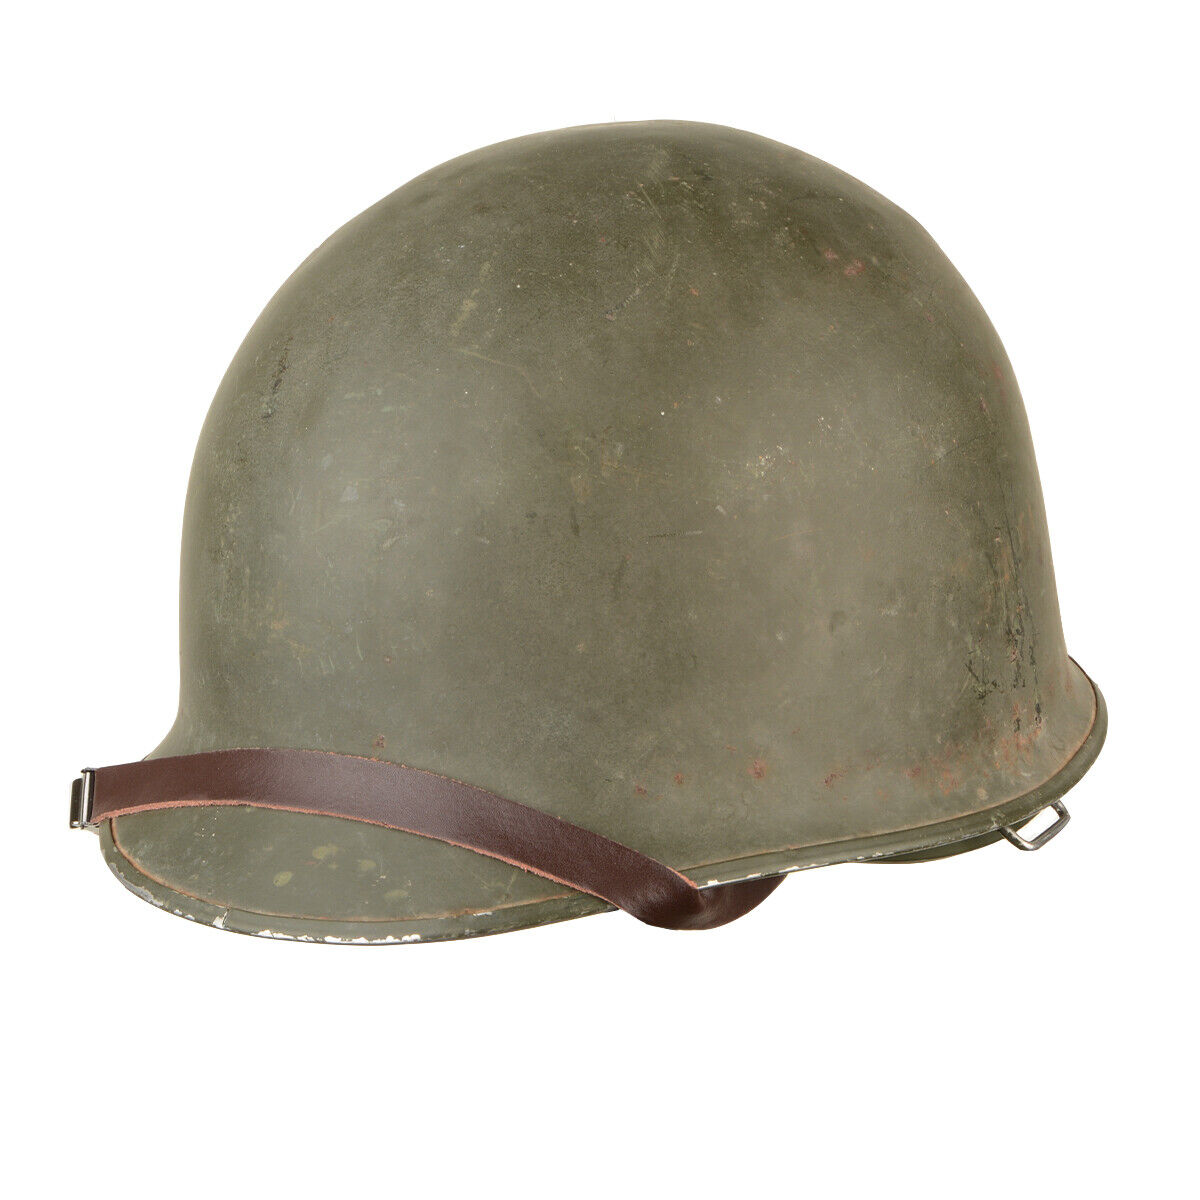 Genuine Original M1 Helm with New Plastic Liner - WW2/Vietnam Reenactment